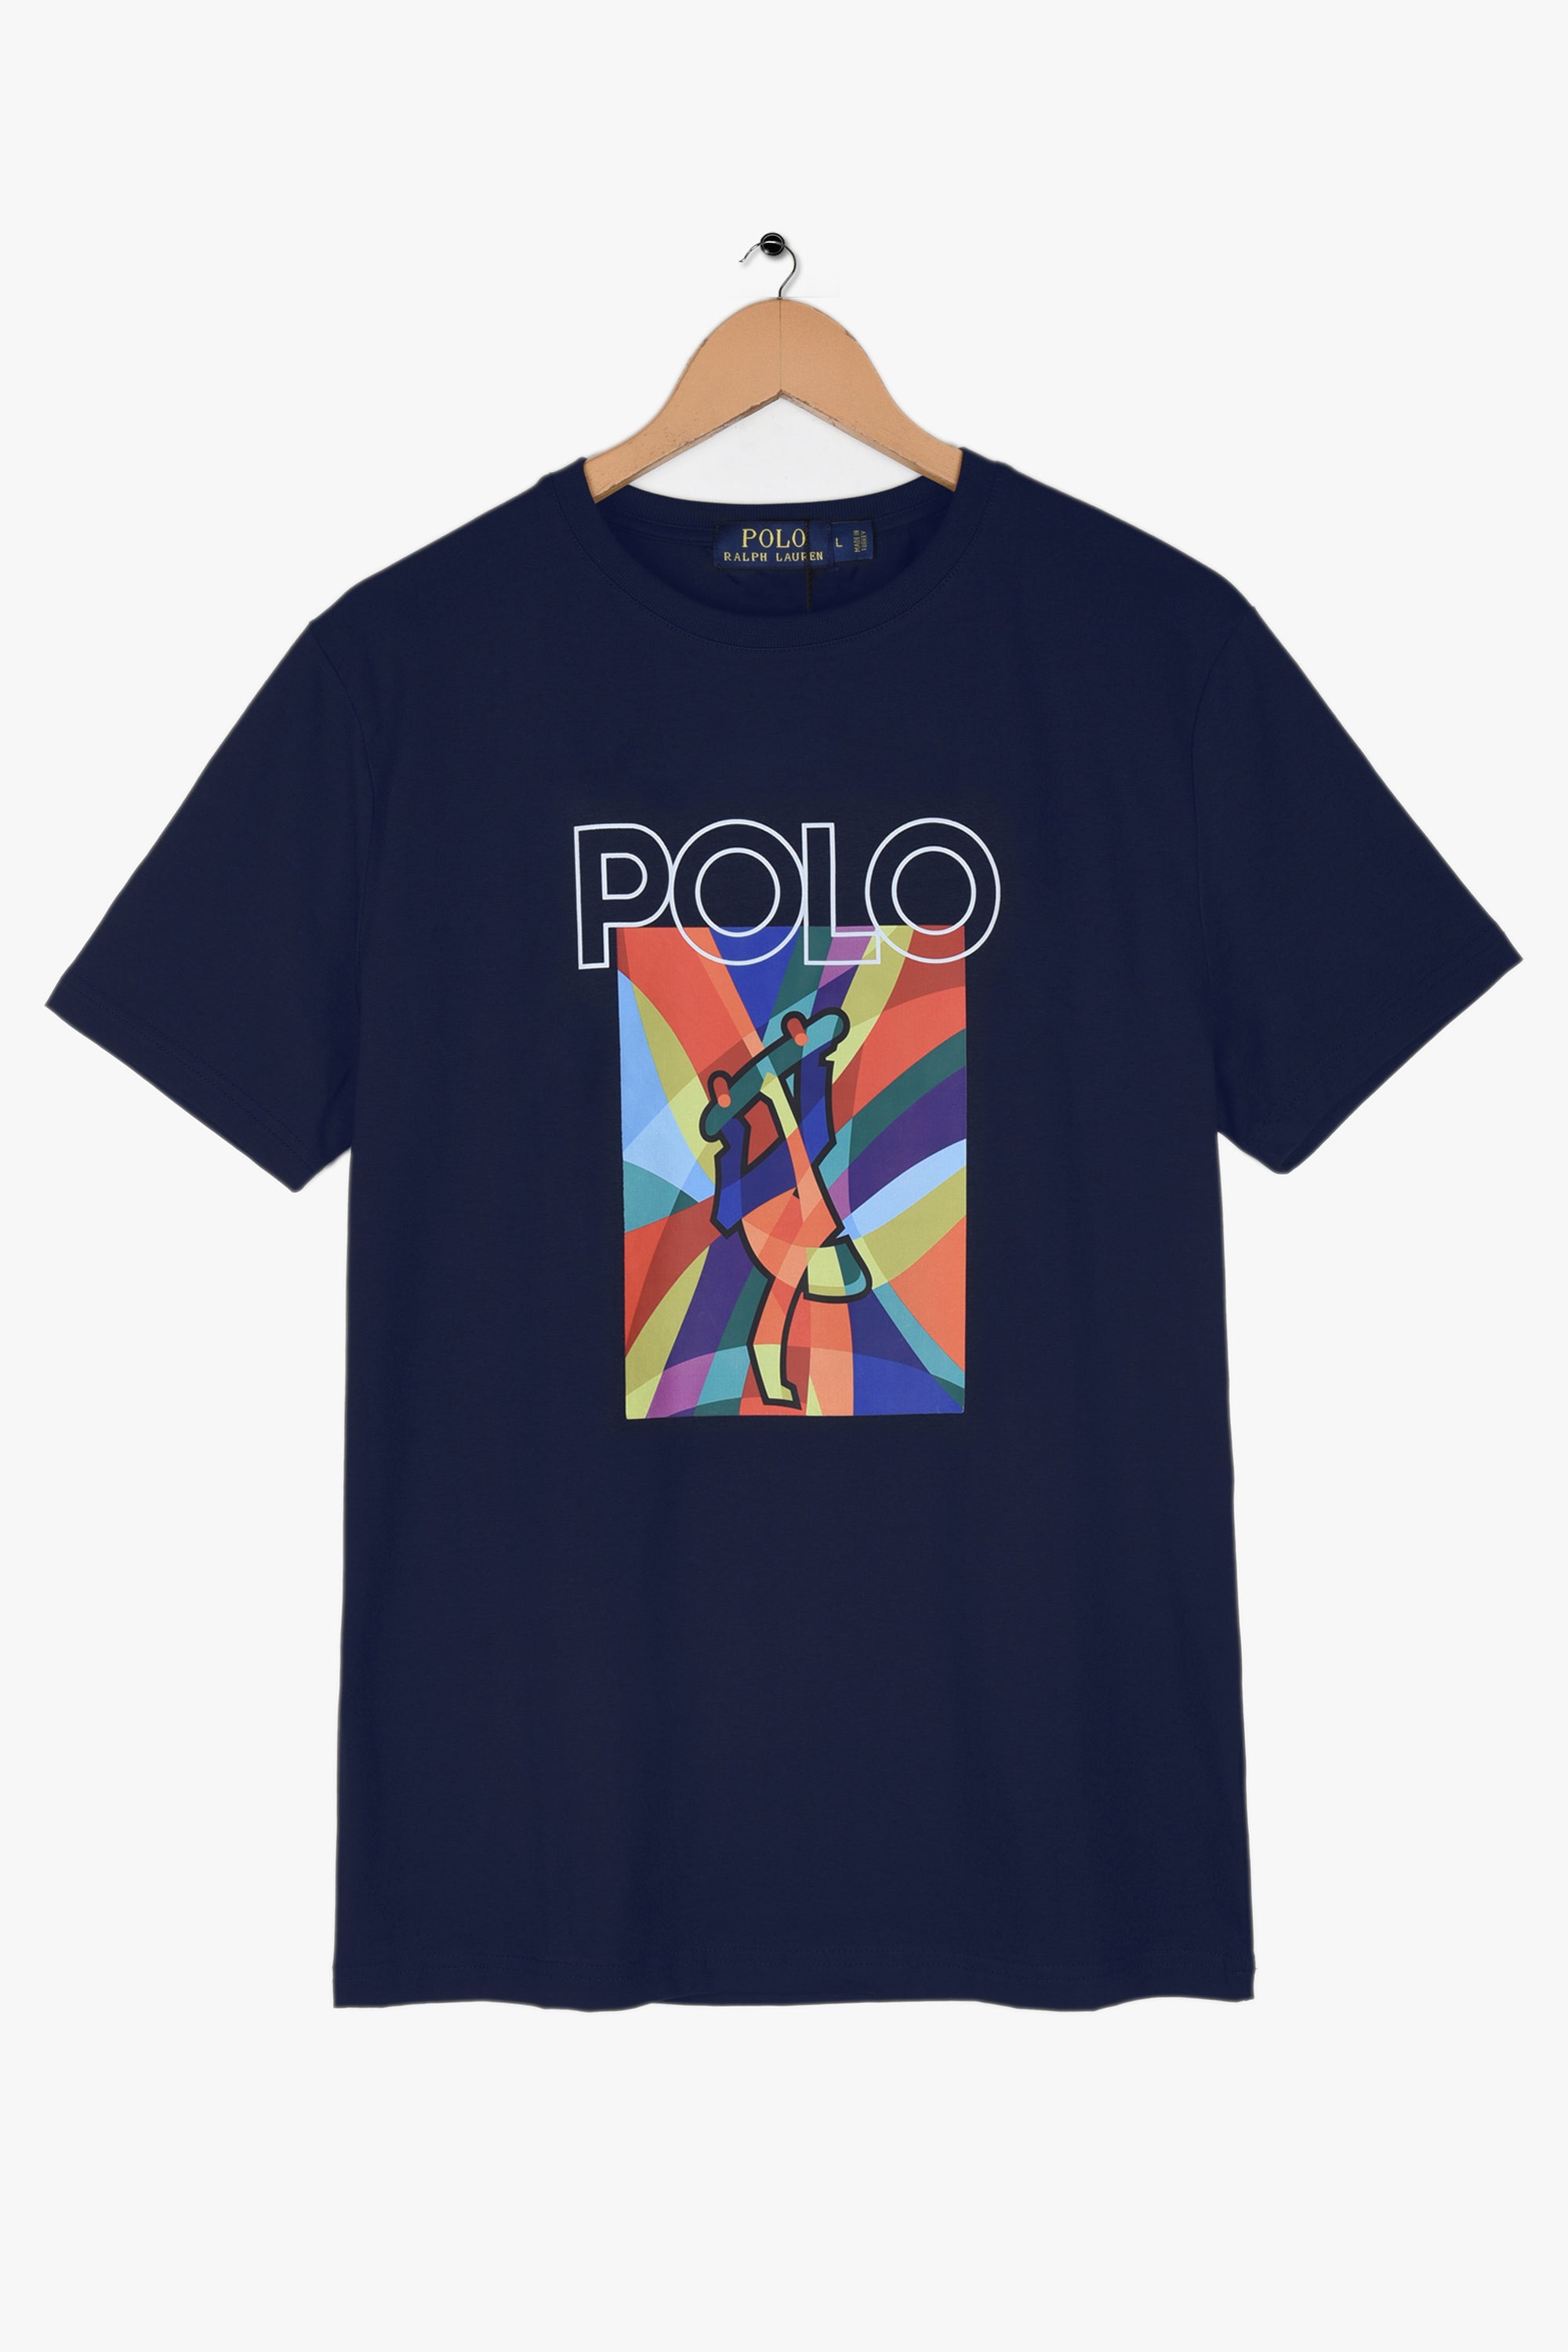 Polo Graphic LOGO T-shirt